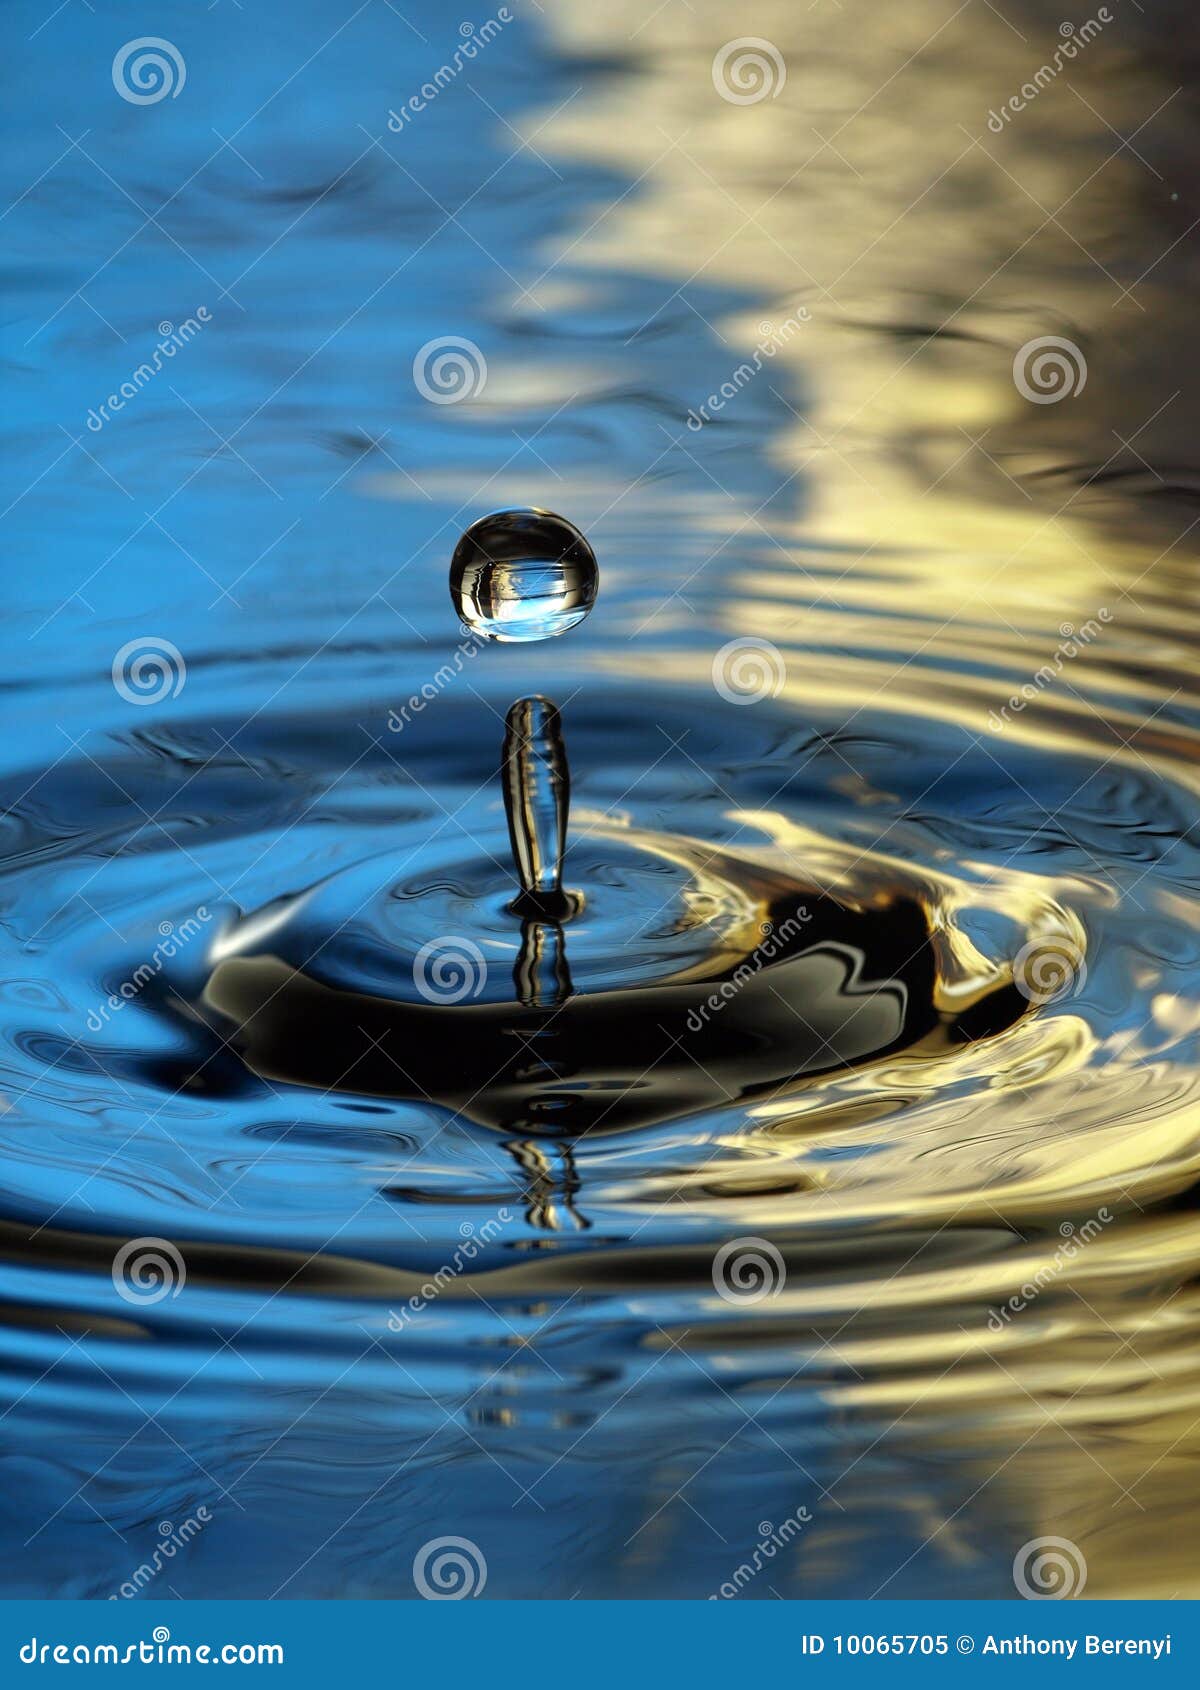 water droplet ripple blue yellow column drop